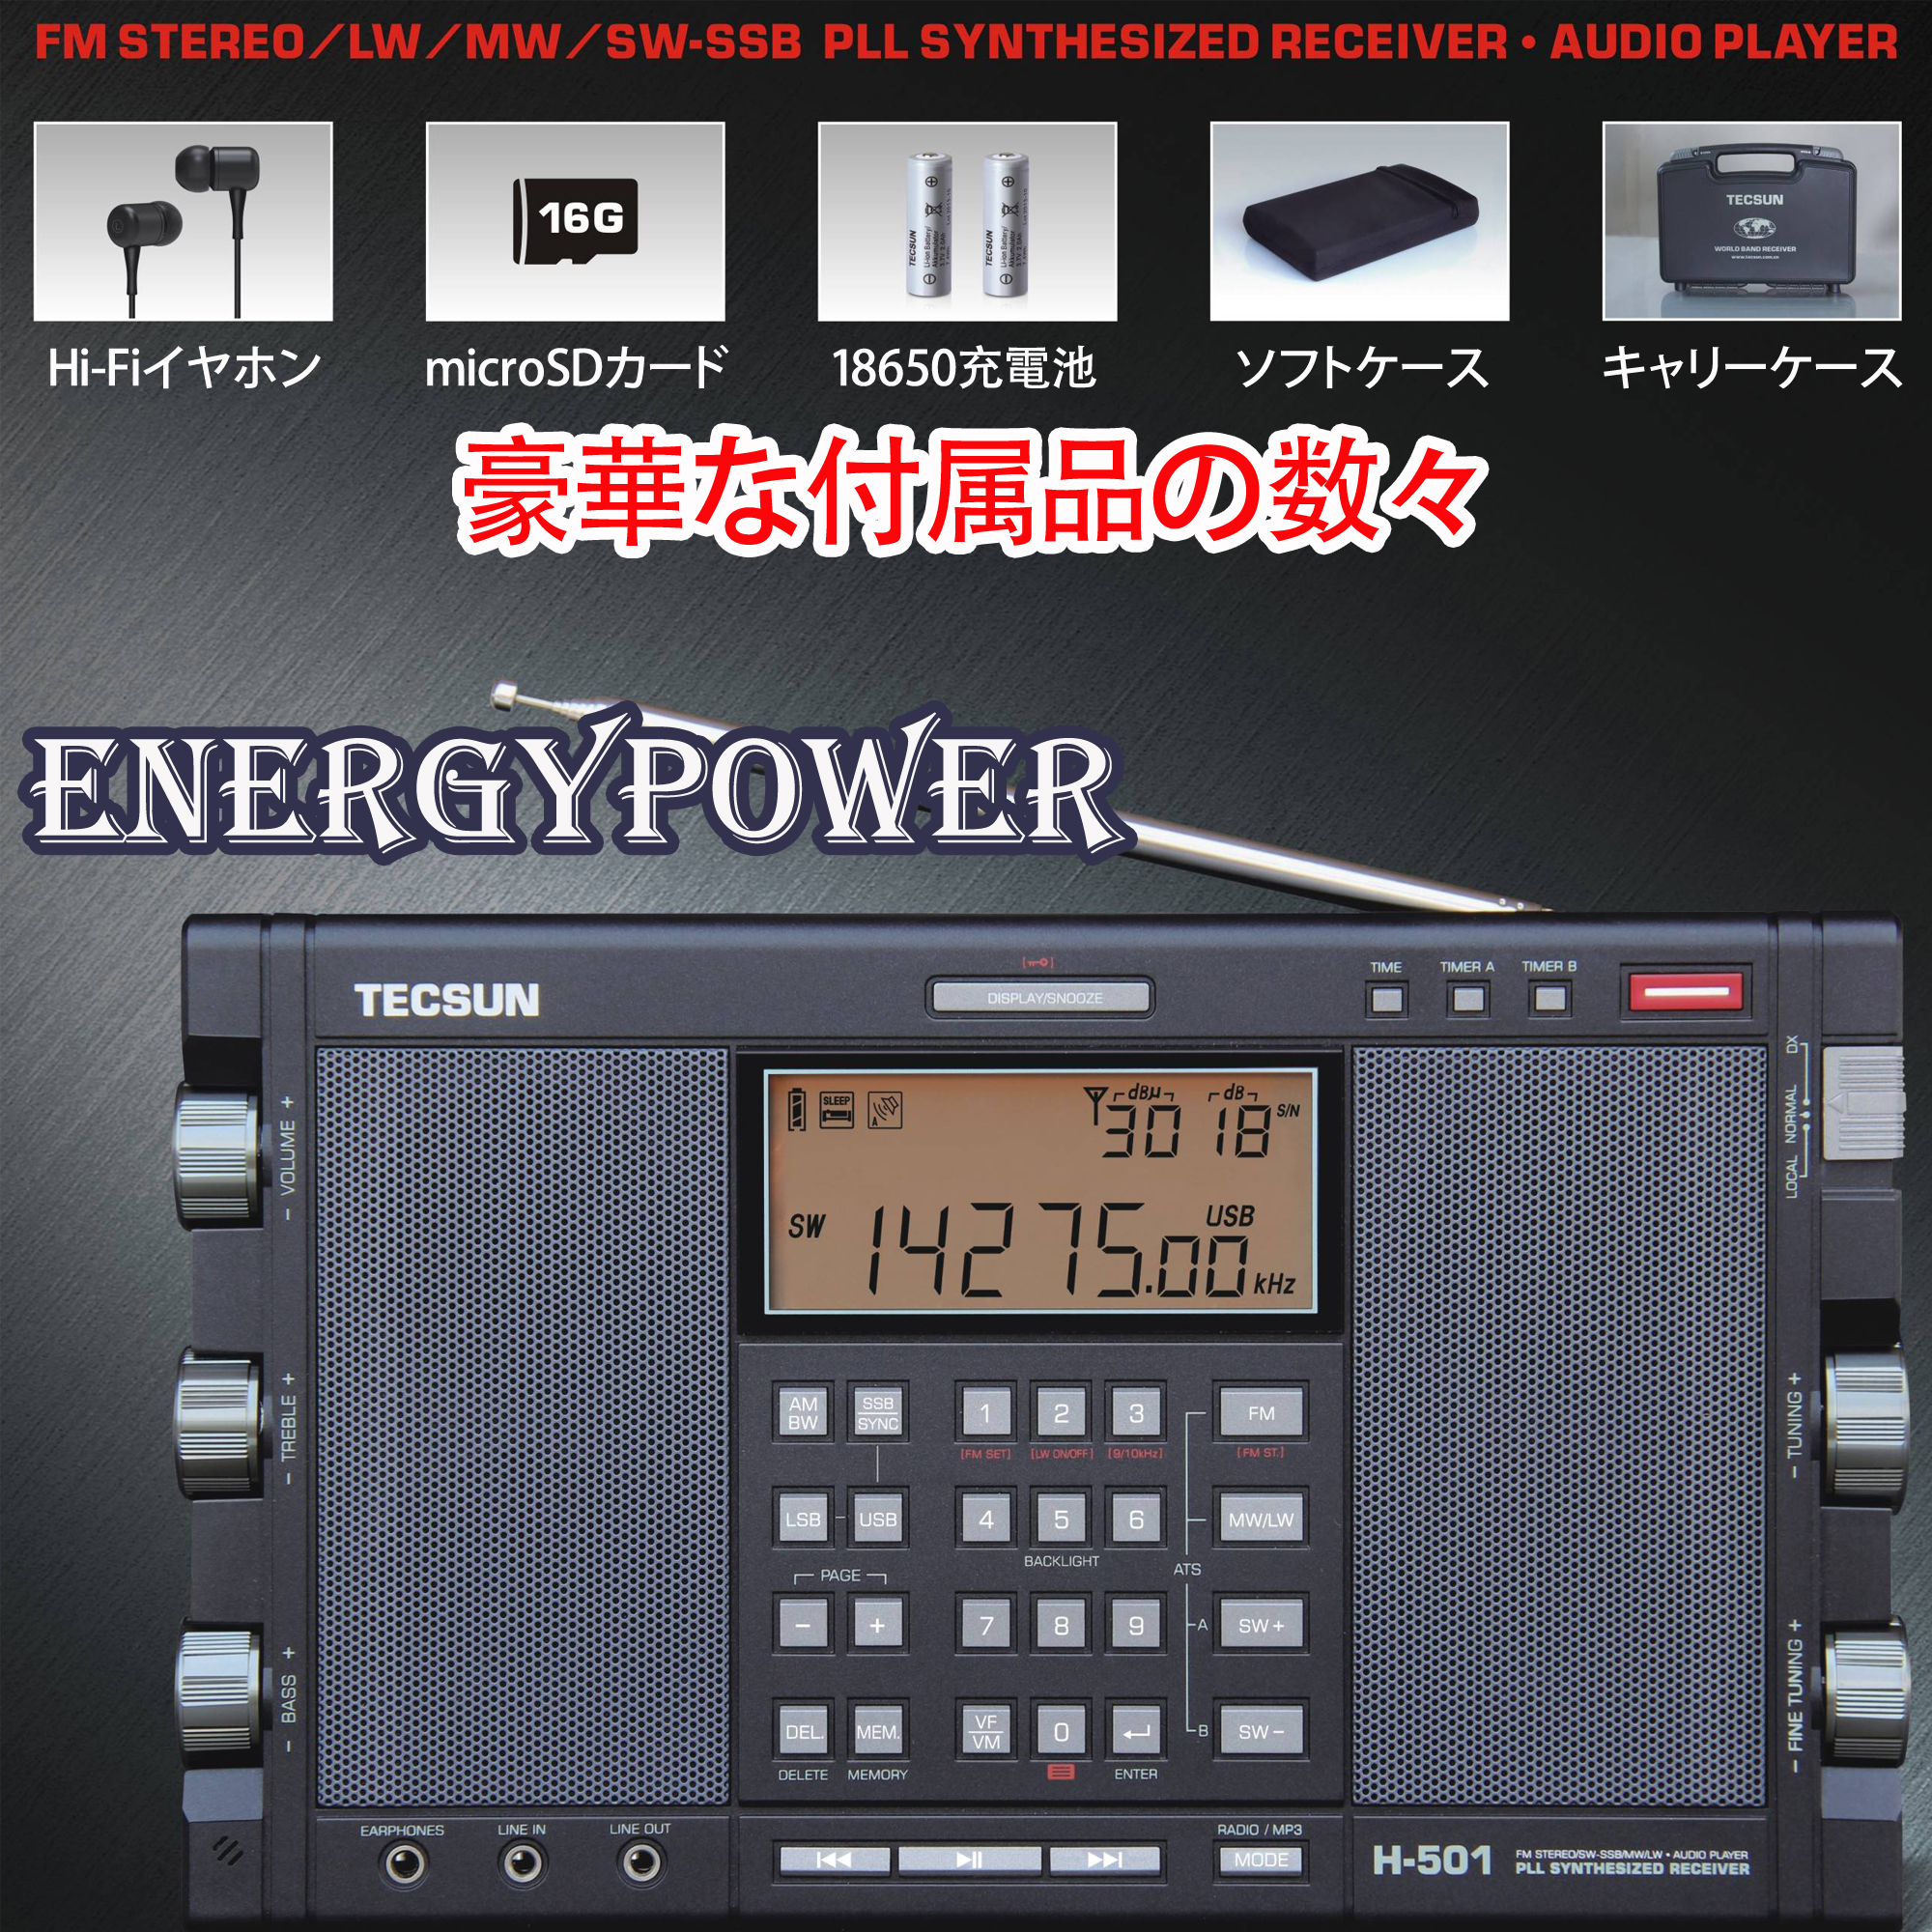 EnergyPower エナジーパワー  PLLシンセサイザーワールドバンドレシーバー TECSUN H-501 短波ラジオ LSB/USB  同期検波＆SSB トリプルコンバージョン FM/LW/MW/SW ステレオスピーカー 3150局メモリー FLAC/APE/WAVハイレゾ音源再生  [日本語説明書付]